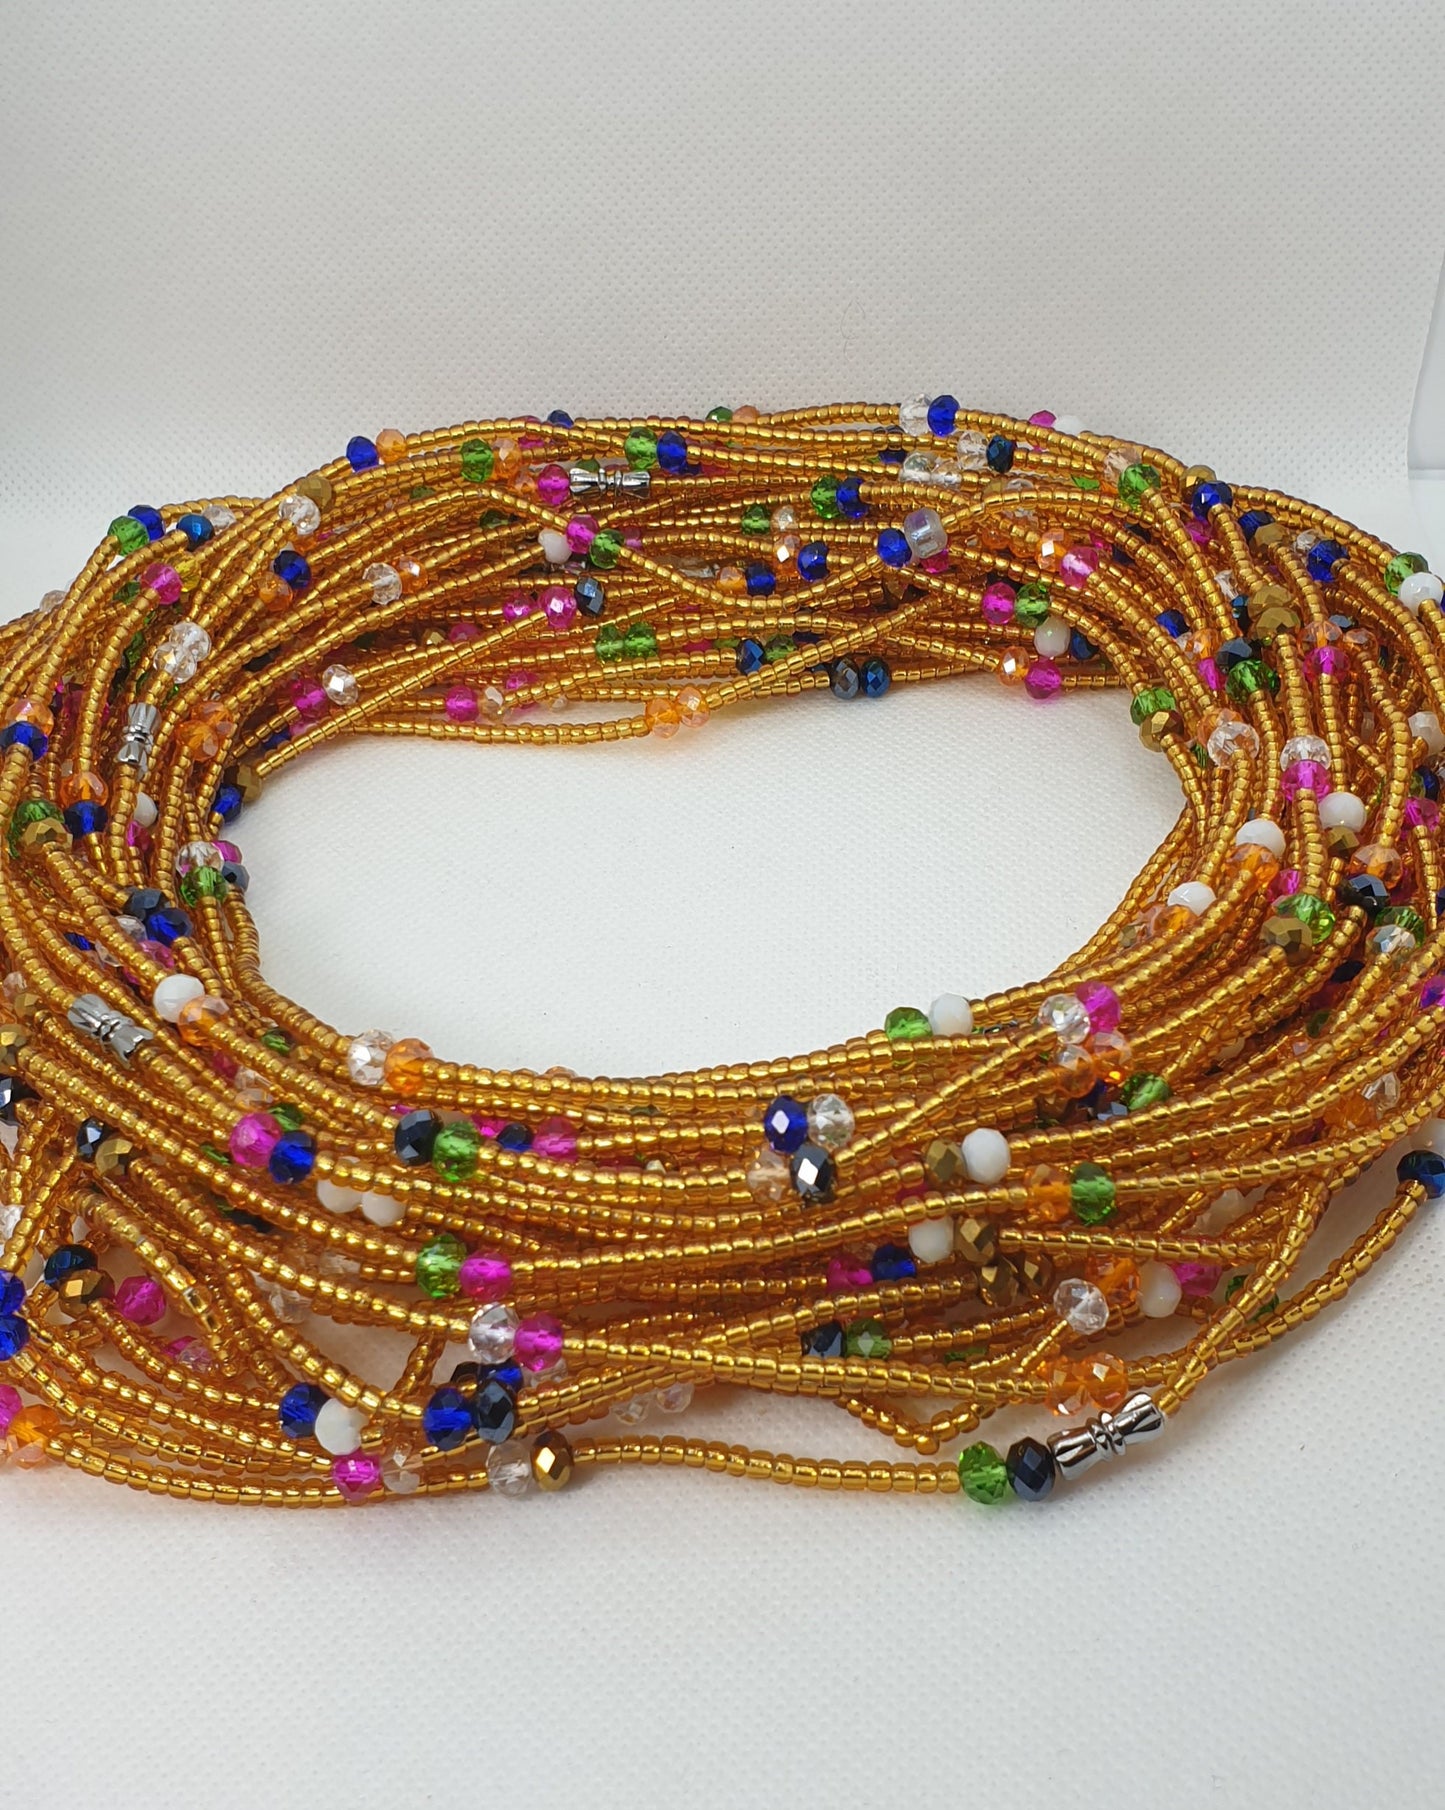 Gold Waist Bead|Belly Chain|weight loss beads|Weight control beads|African Waist bead|Multi coloured African waist Beads! On sales.